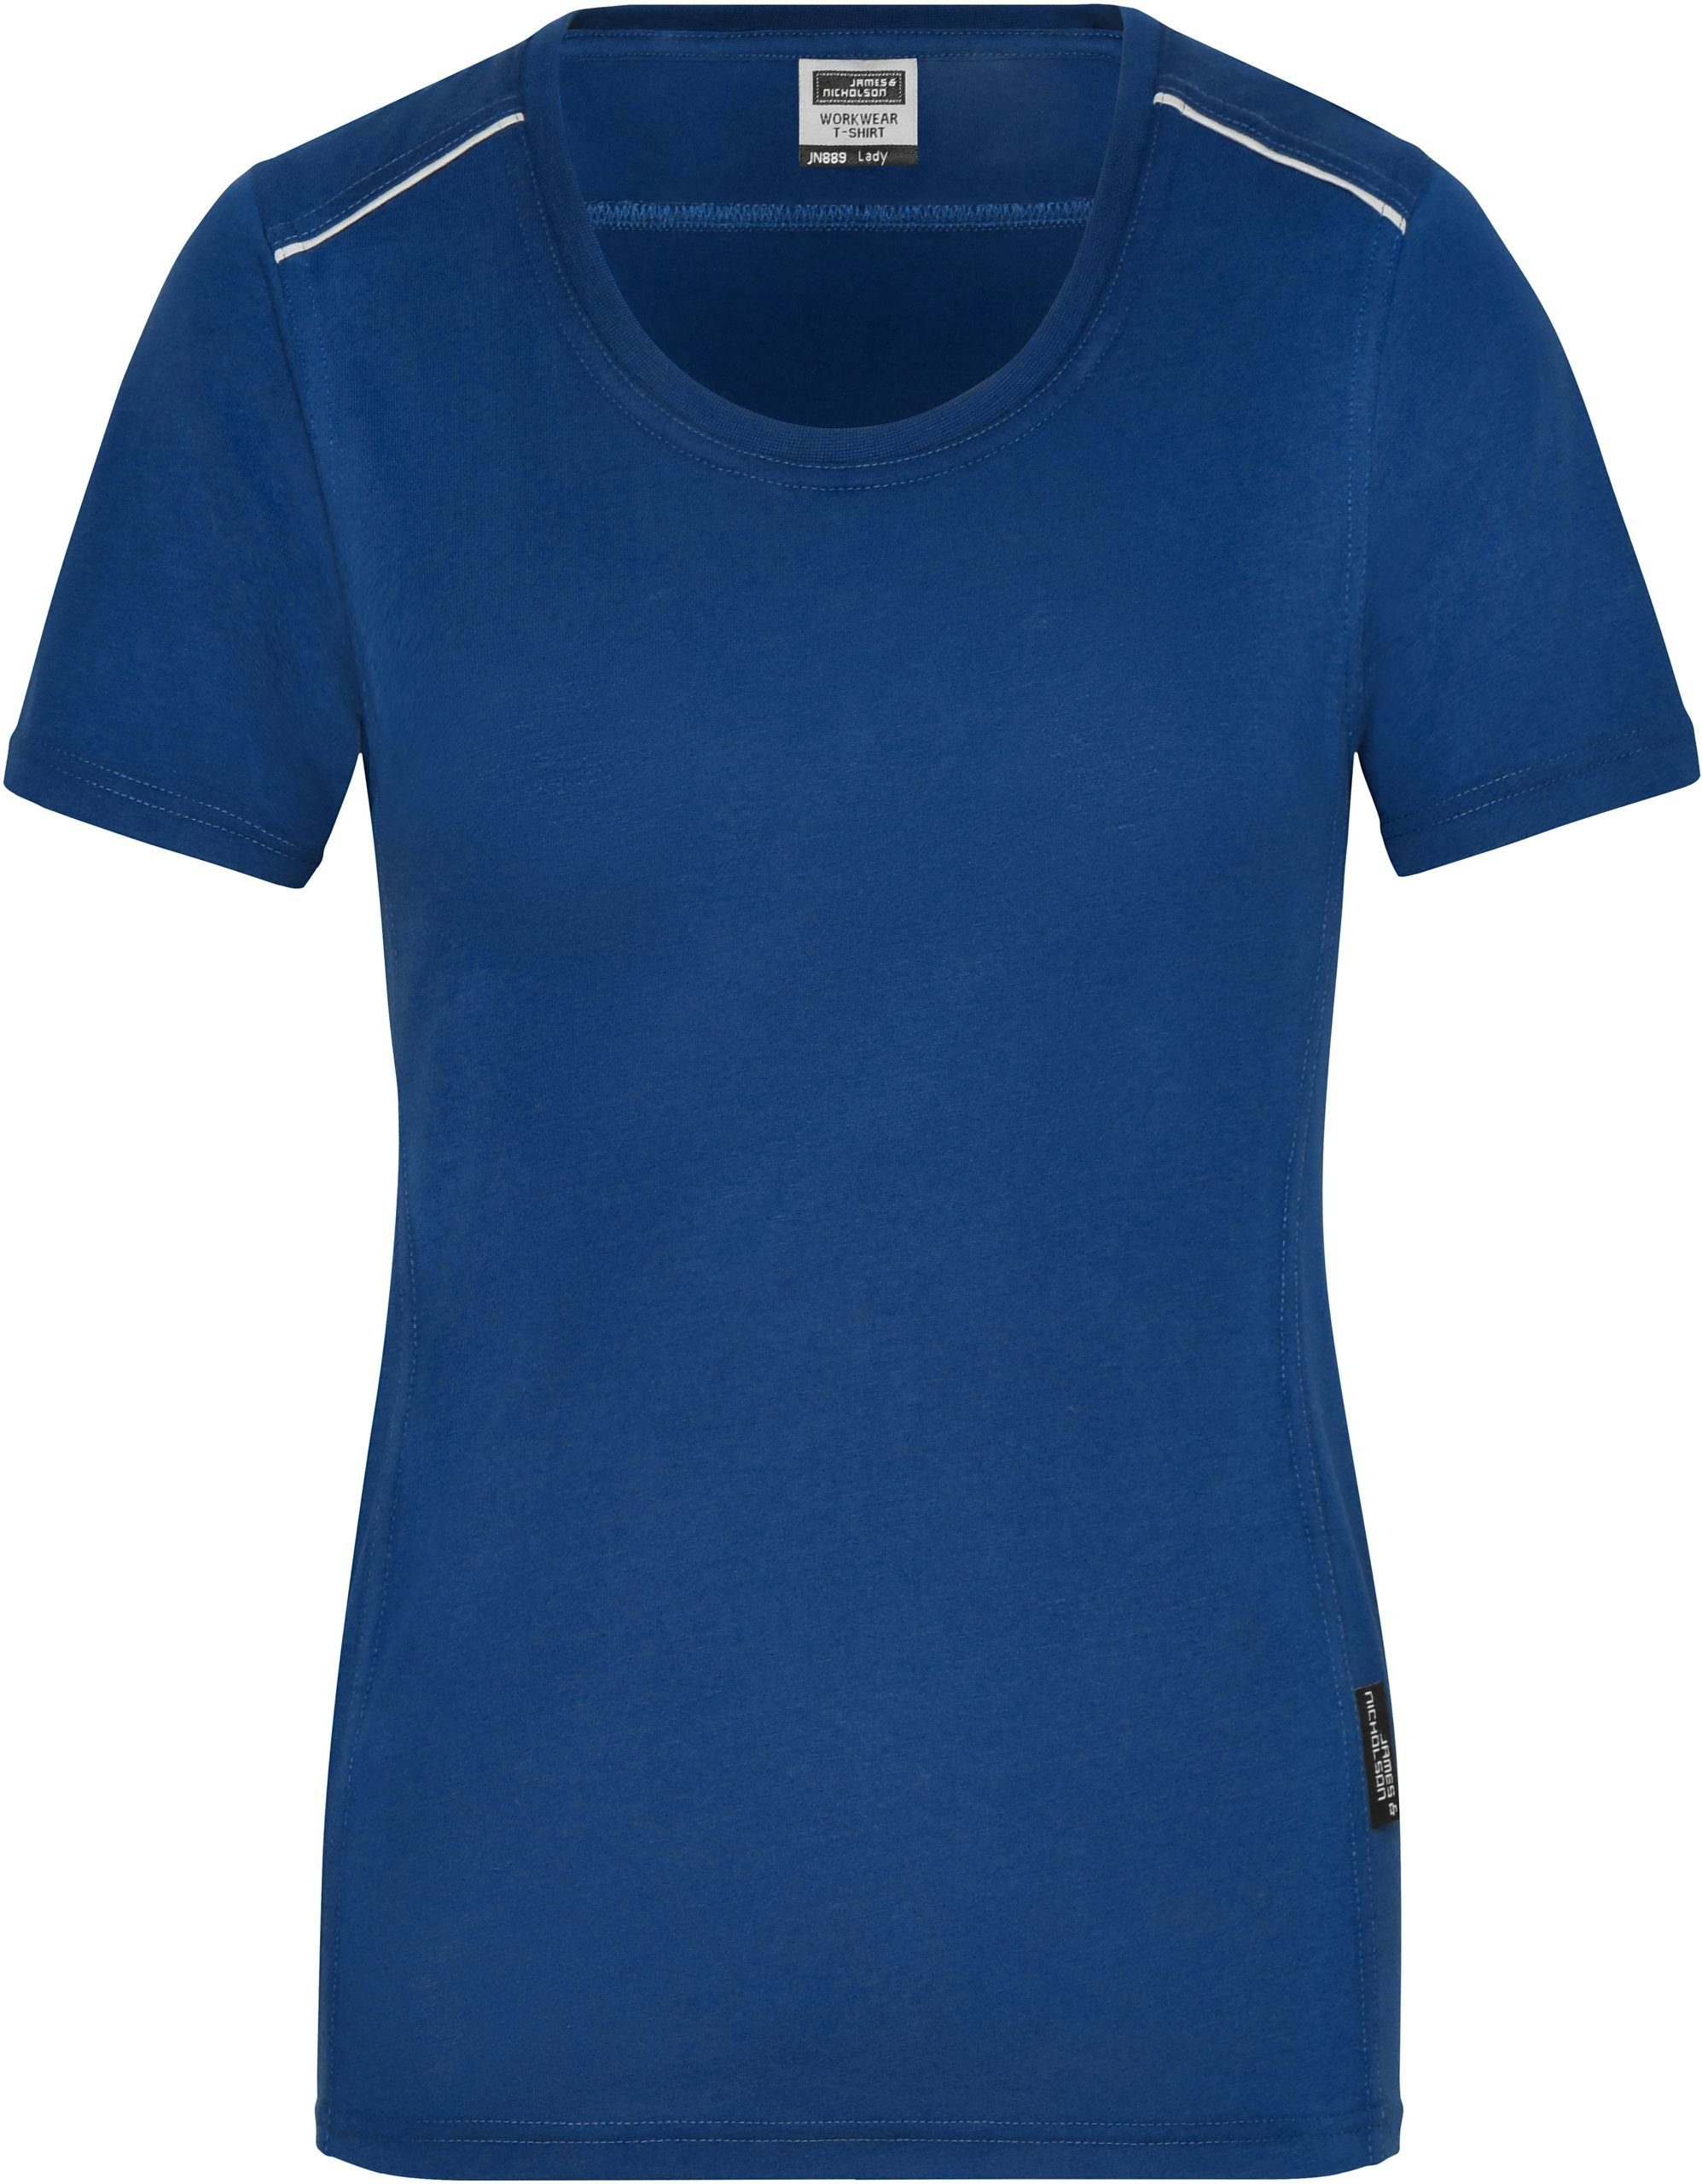 James & Nicholson Bio T-Shirt Navy Workwear FaS50889 Arbeits T-Shirt Baumwolle -Solid